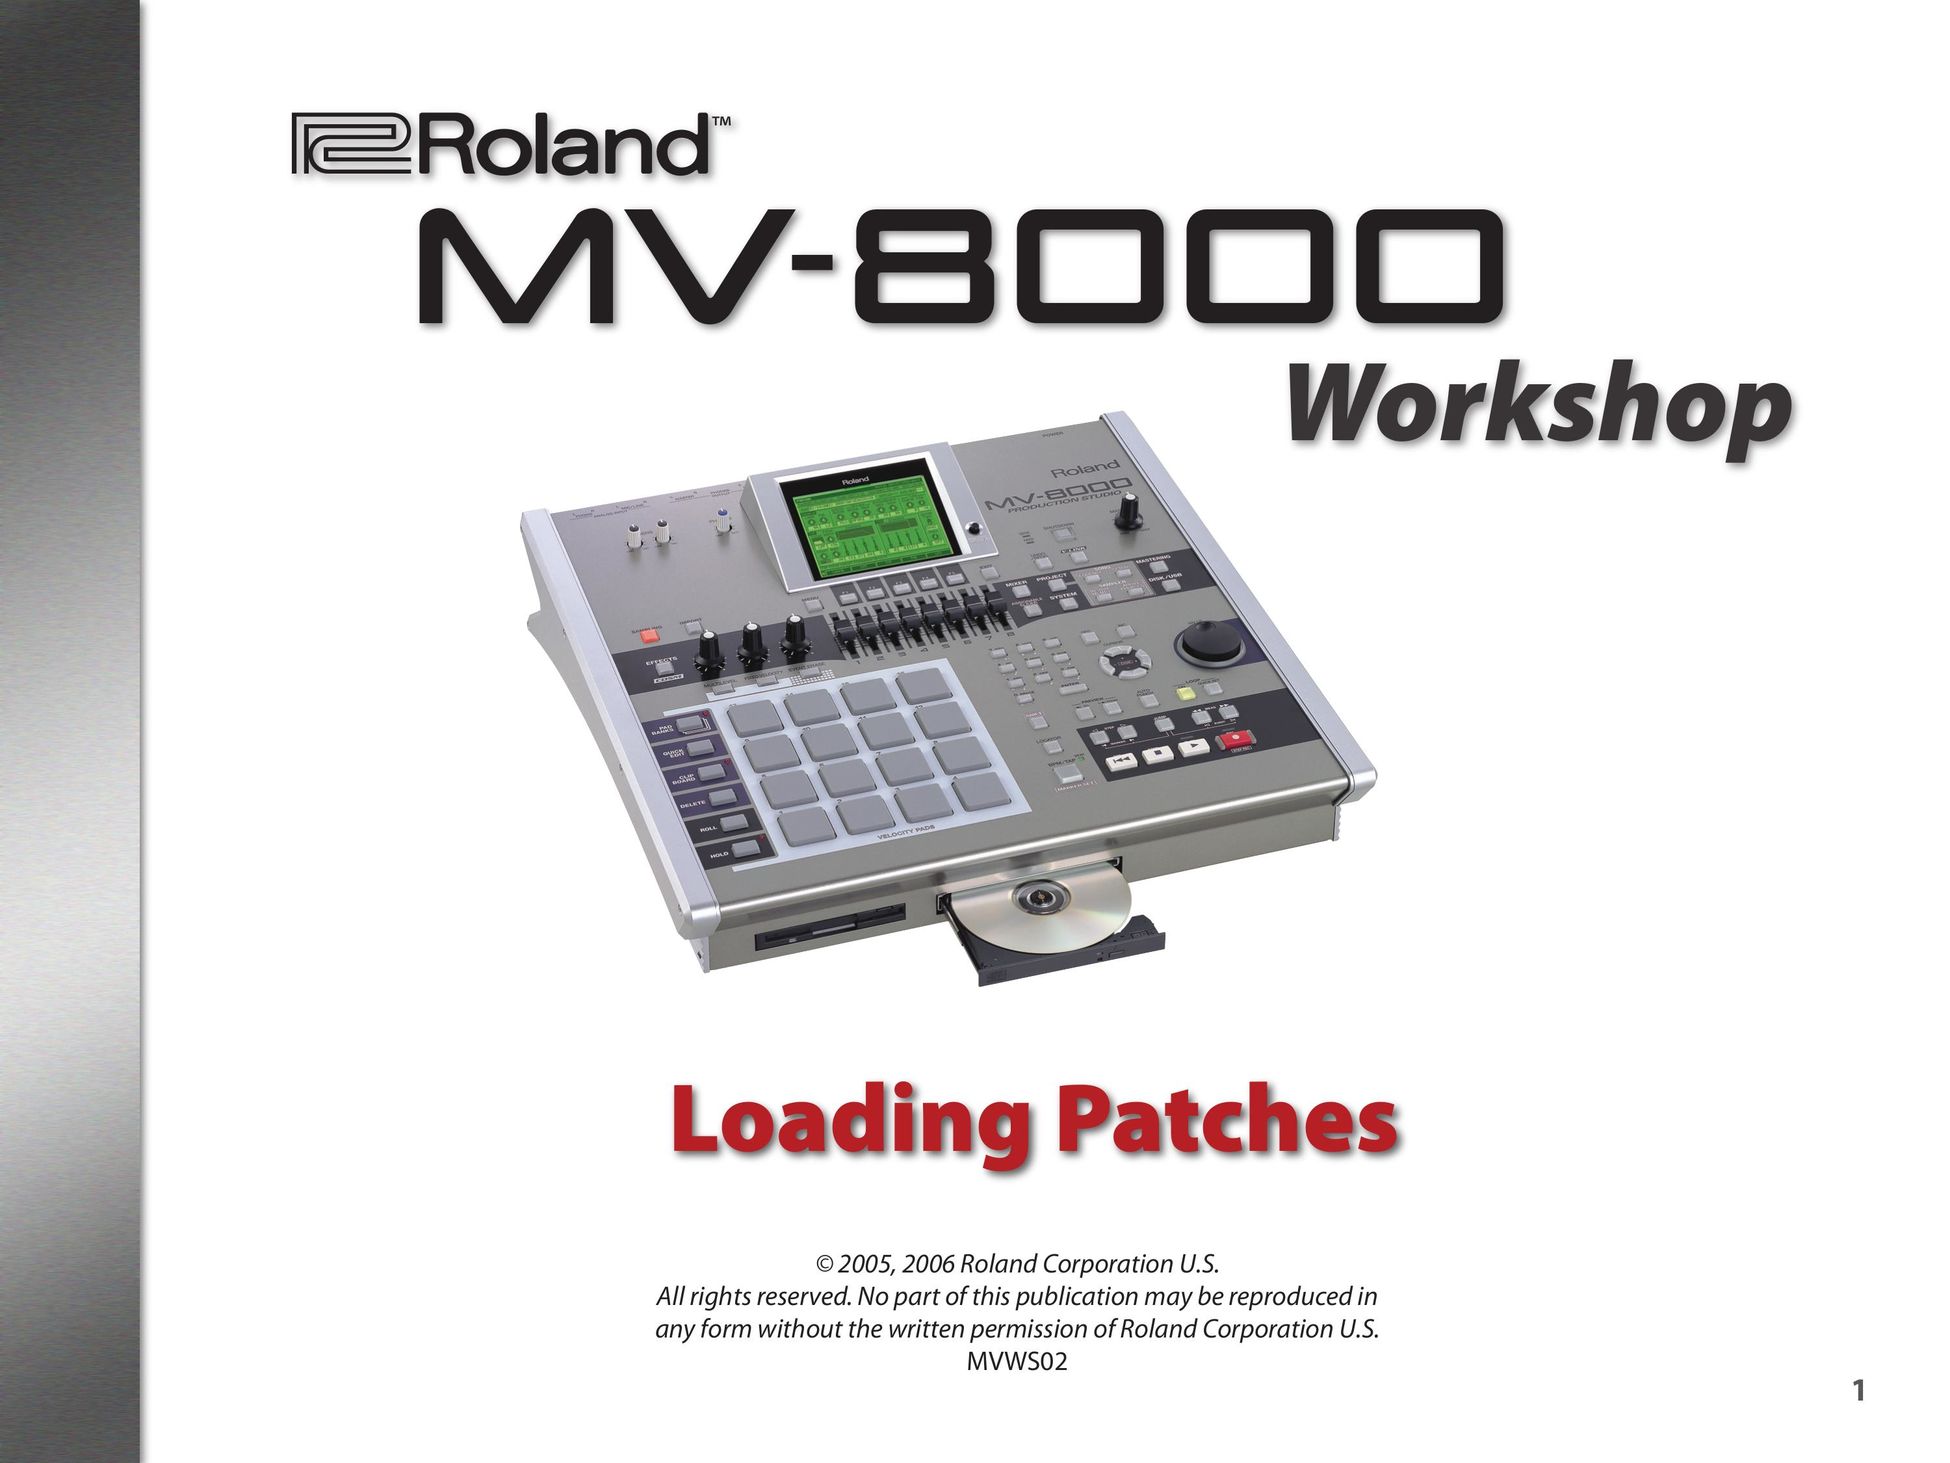 Roland MV-8000 Two-Way Radio User Manual